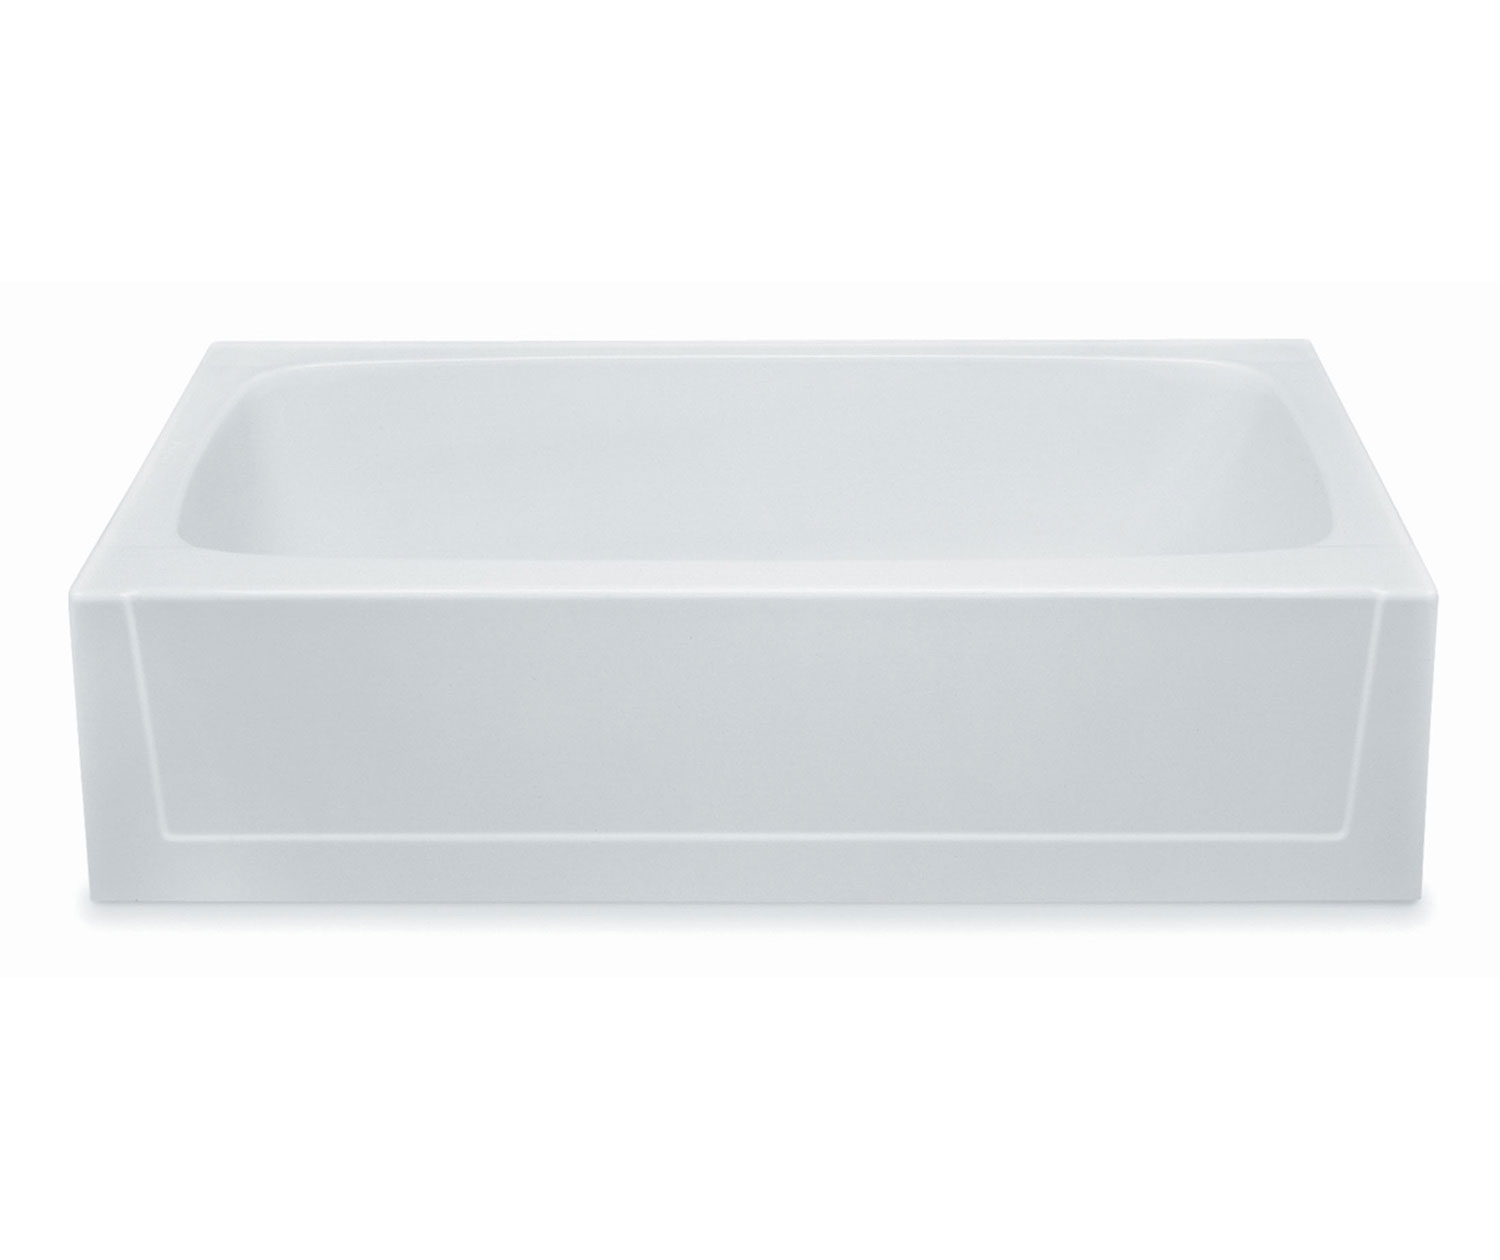 260030M AFR 60 x 30 AcrylX Alcove Left-Hand Drain Bathtub in White 